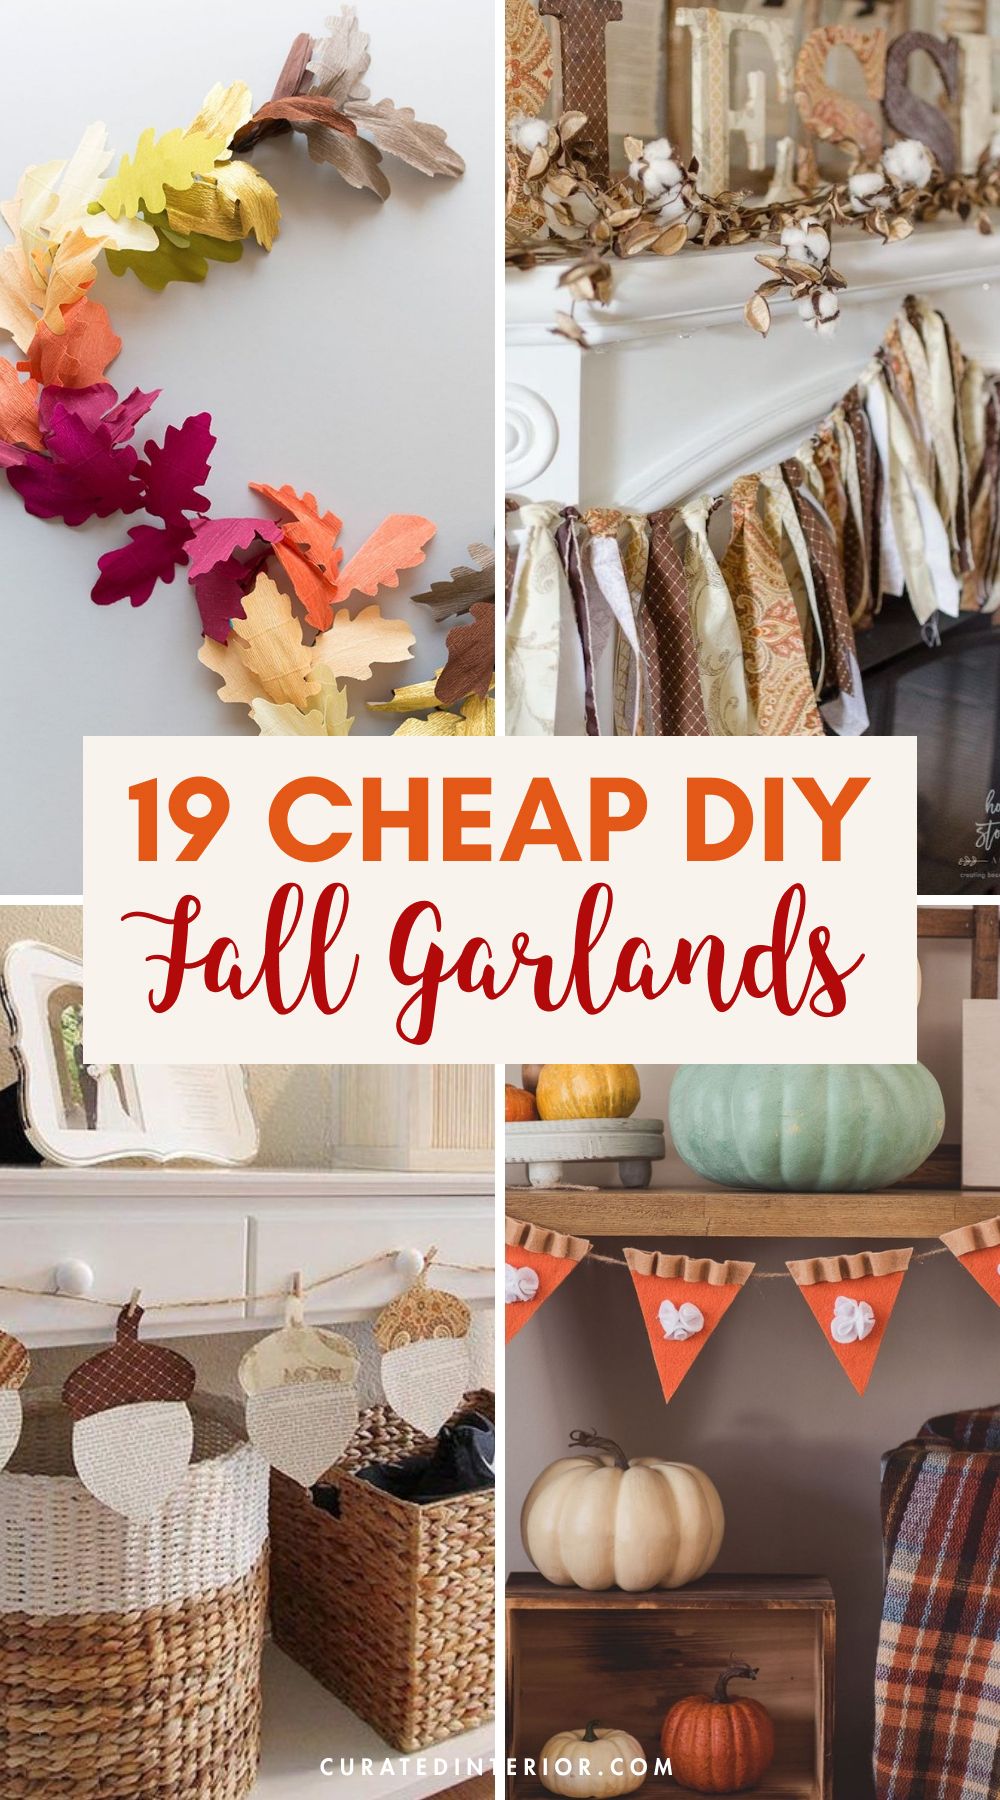 19 Cheap DIY Fall Garlands to Make